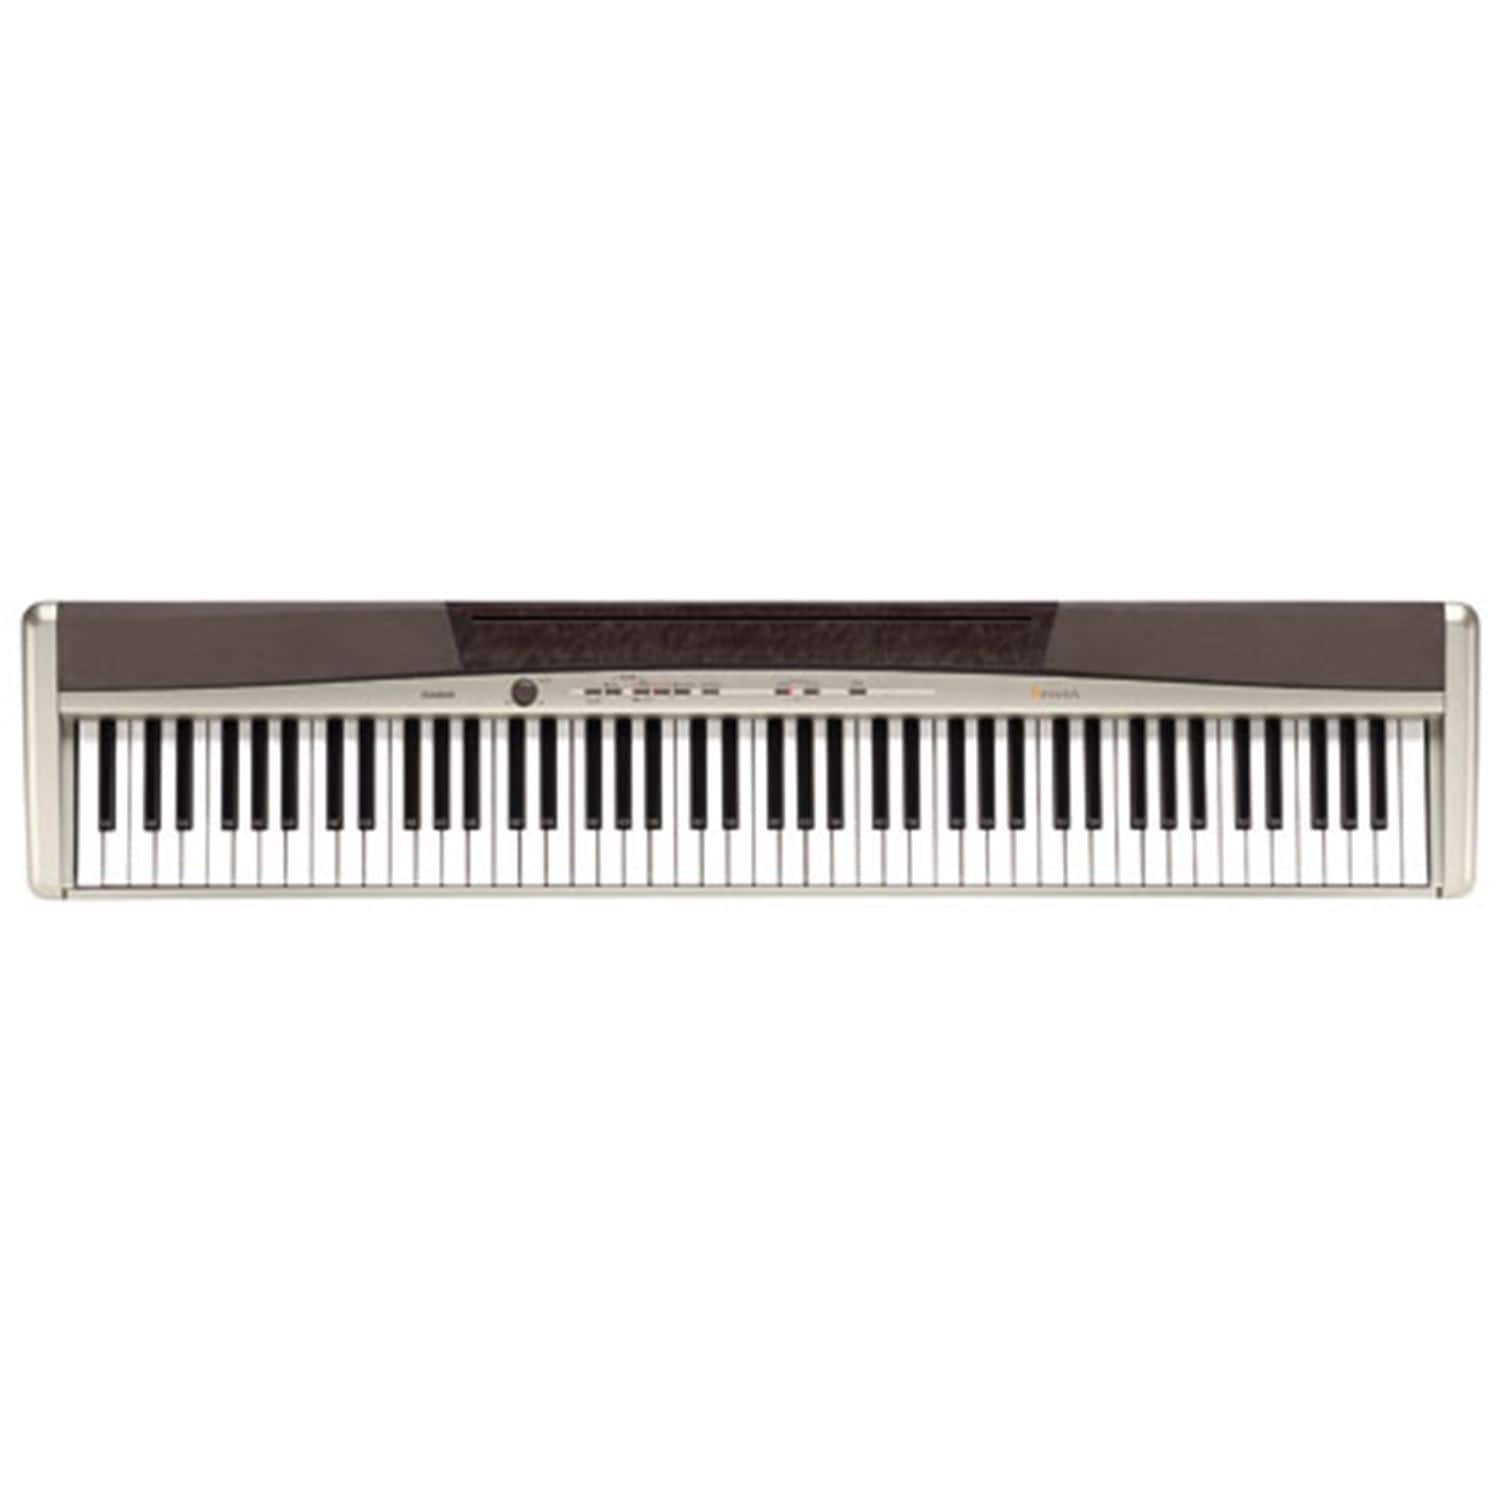 Casio PX-120 88-Key Digital Piano - PSSL ProSound and Stage Lighting